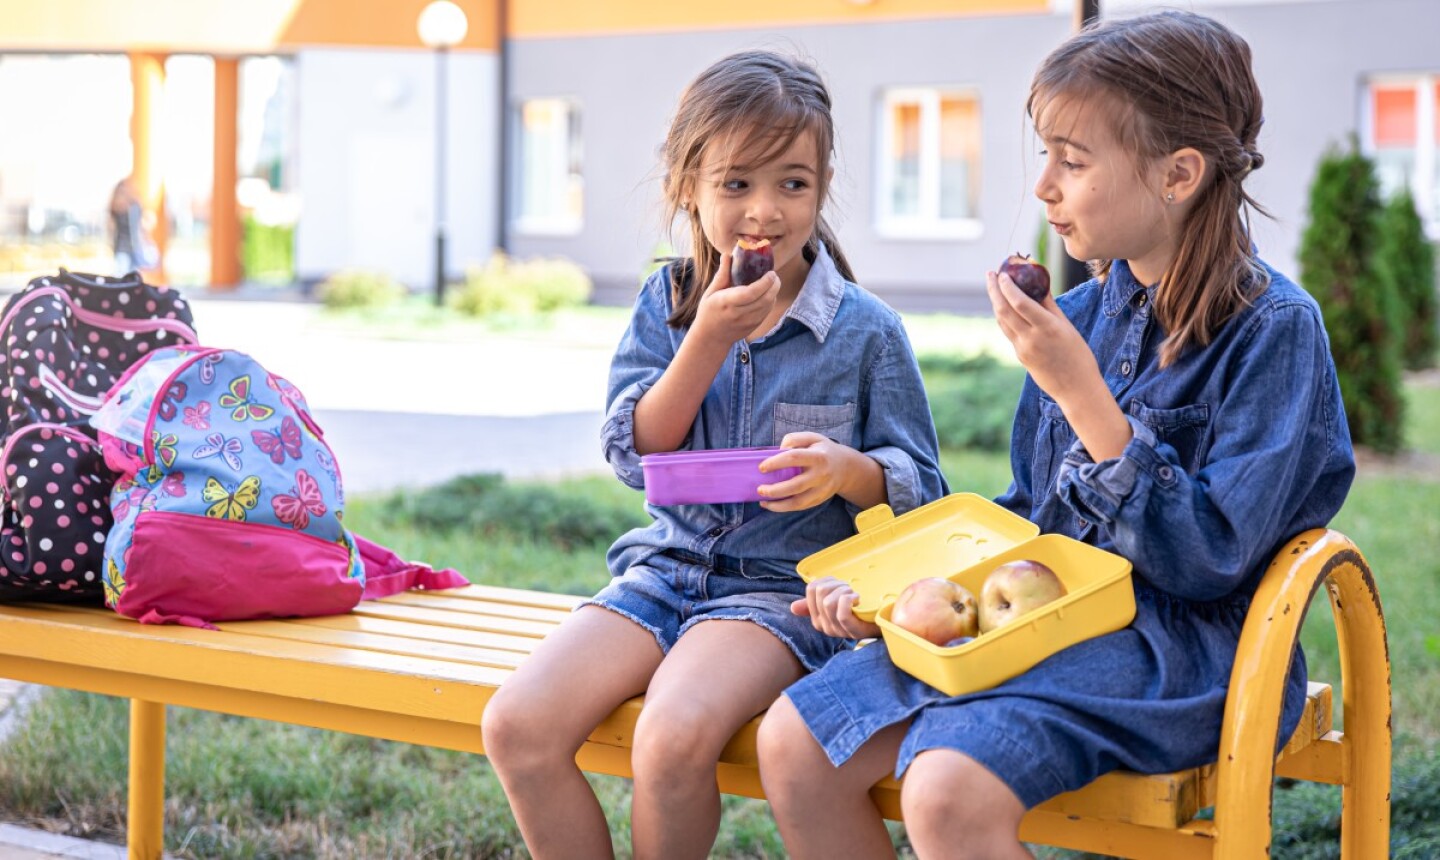 little-school-girls-sitting-bench-school-yard-eating-from-lunch-boxes.jpg